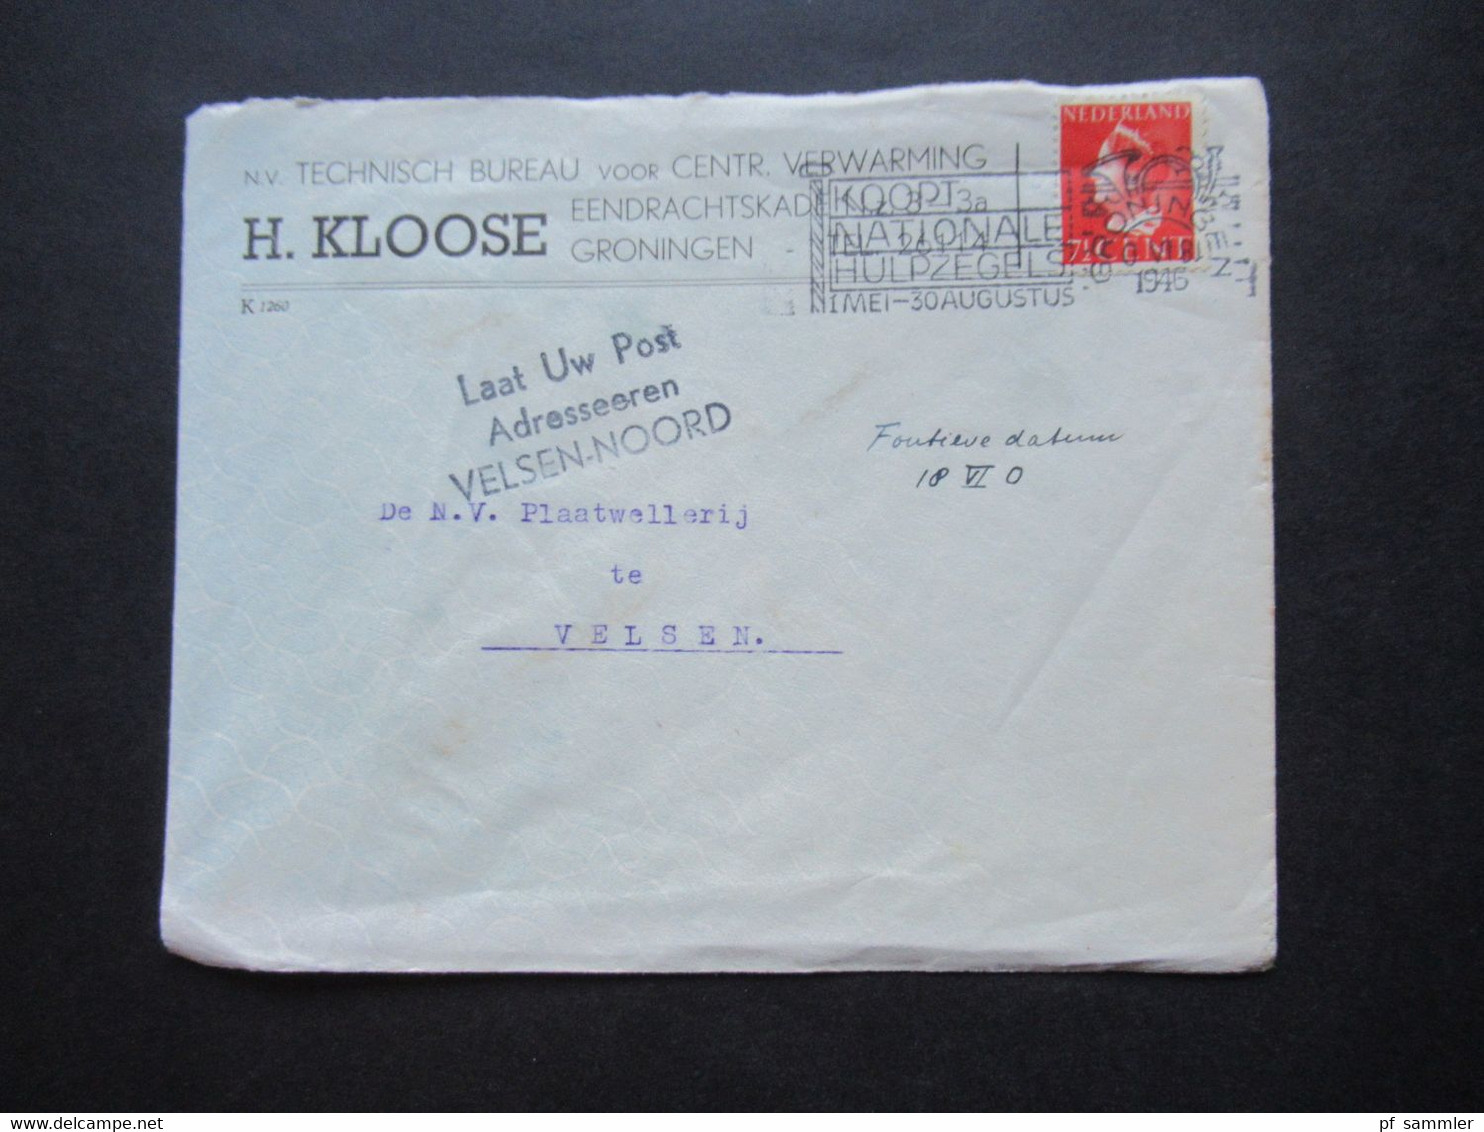 Niederlande 1940 Verwendet 1946 Königin Wilhelmina Nr.342 EF Nebenstempel L3 Laat Uw Post Adresseeren Velsen - Noord - Lettres & Documents